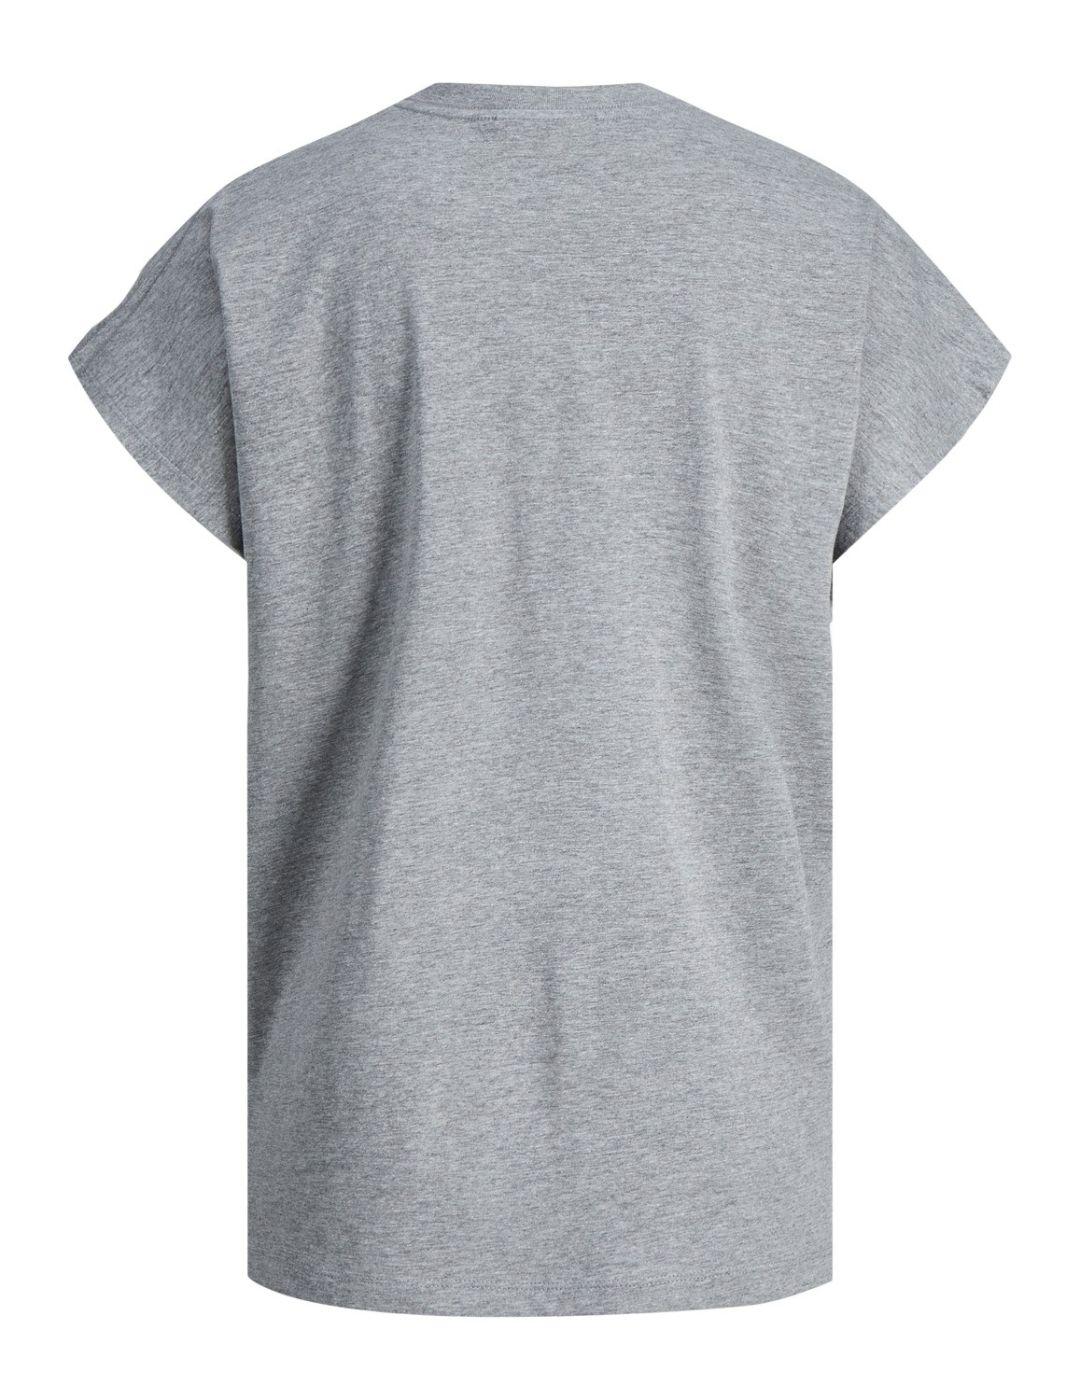 Camiseta JJXX astrid gris jaspeado para mujer -b